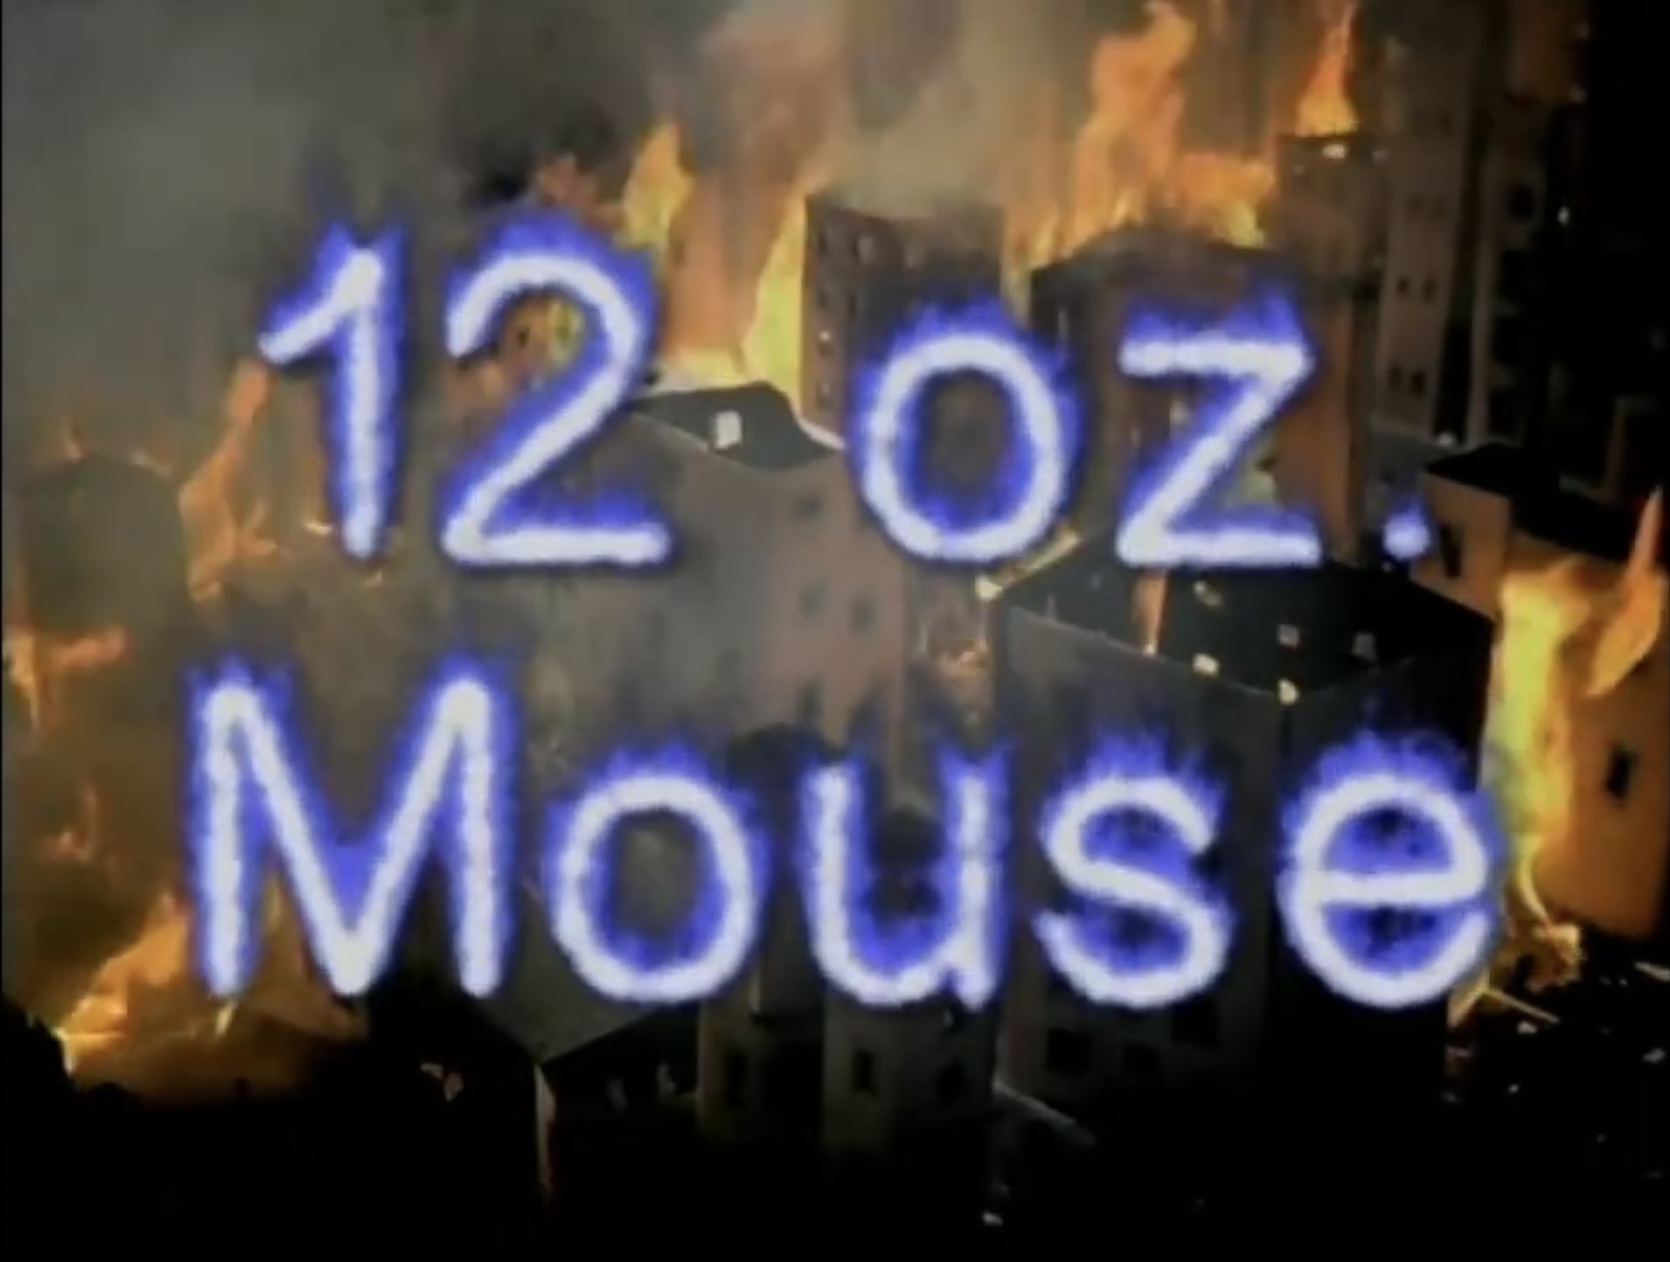 12 oz mouse logo.jpeg